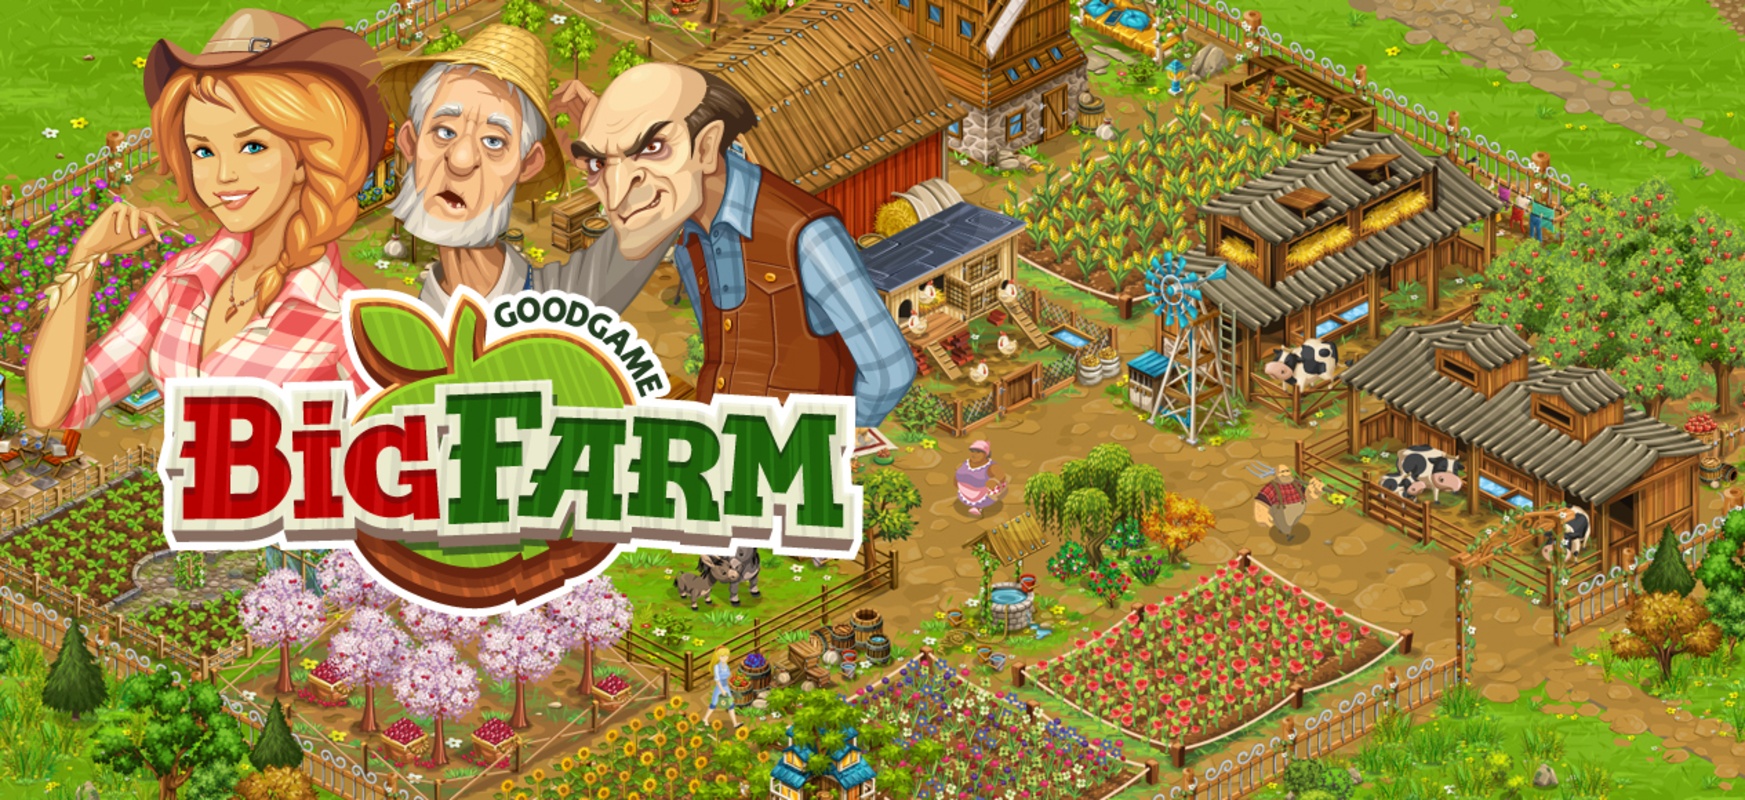 Big Farm 1.0 for Windows Screenshot 5